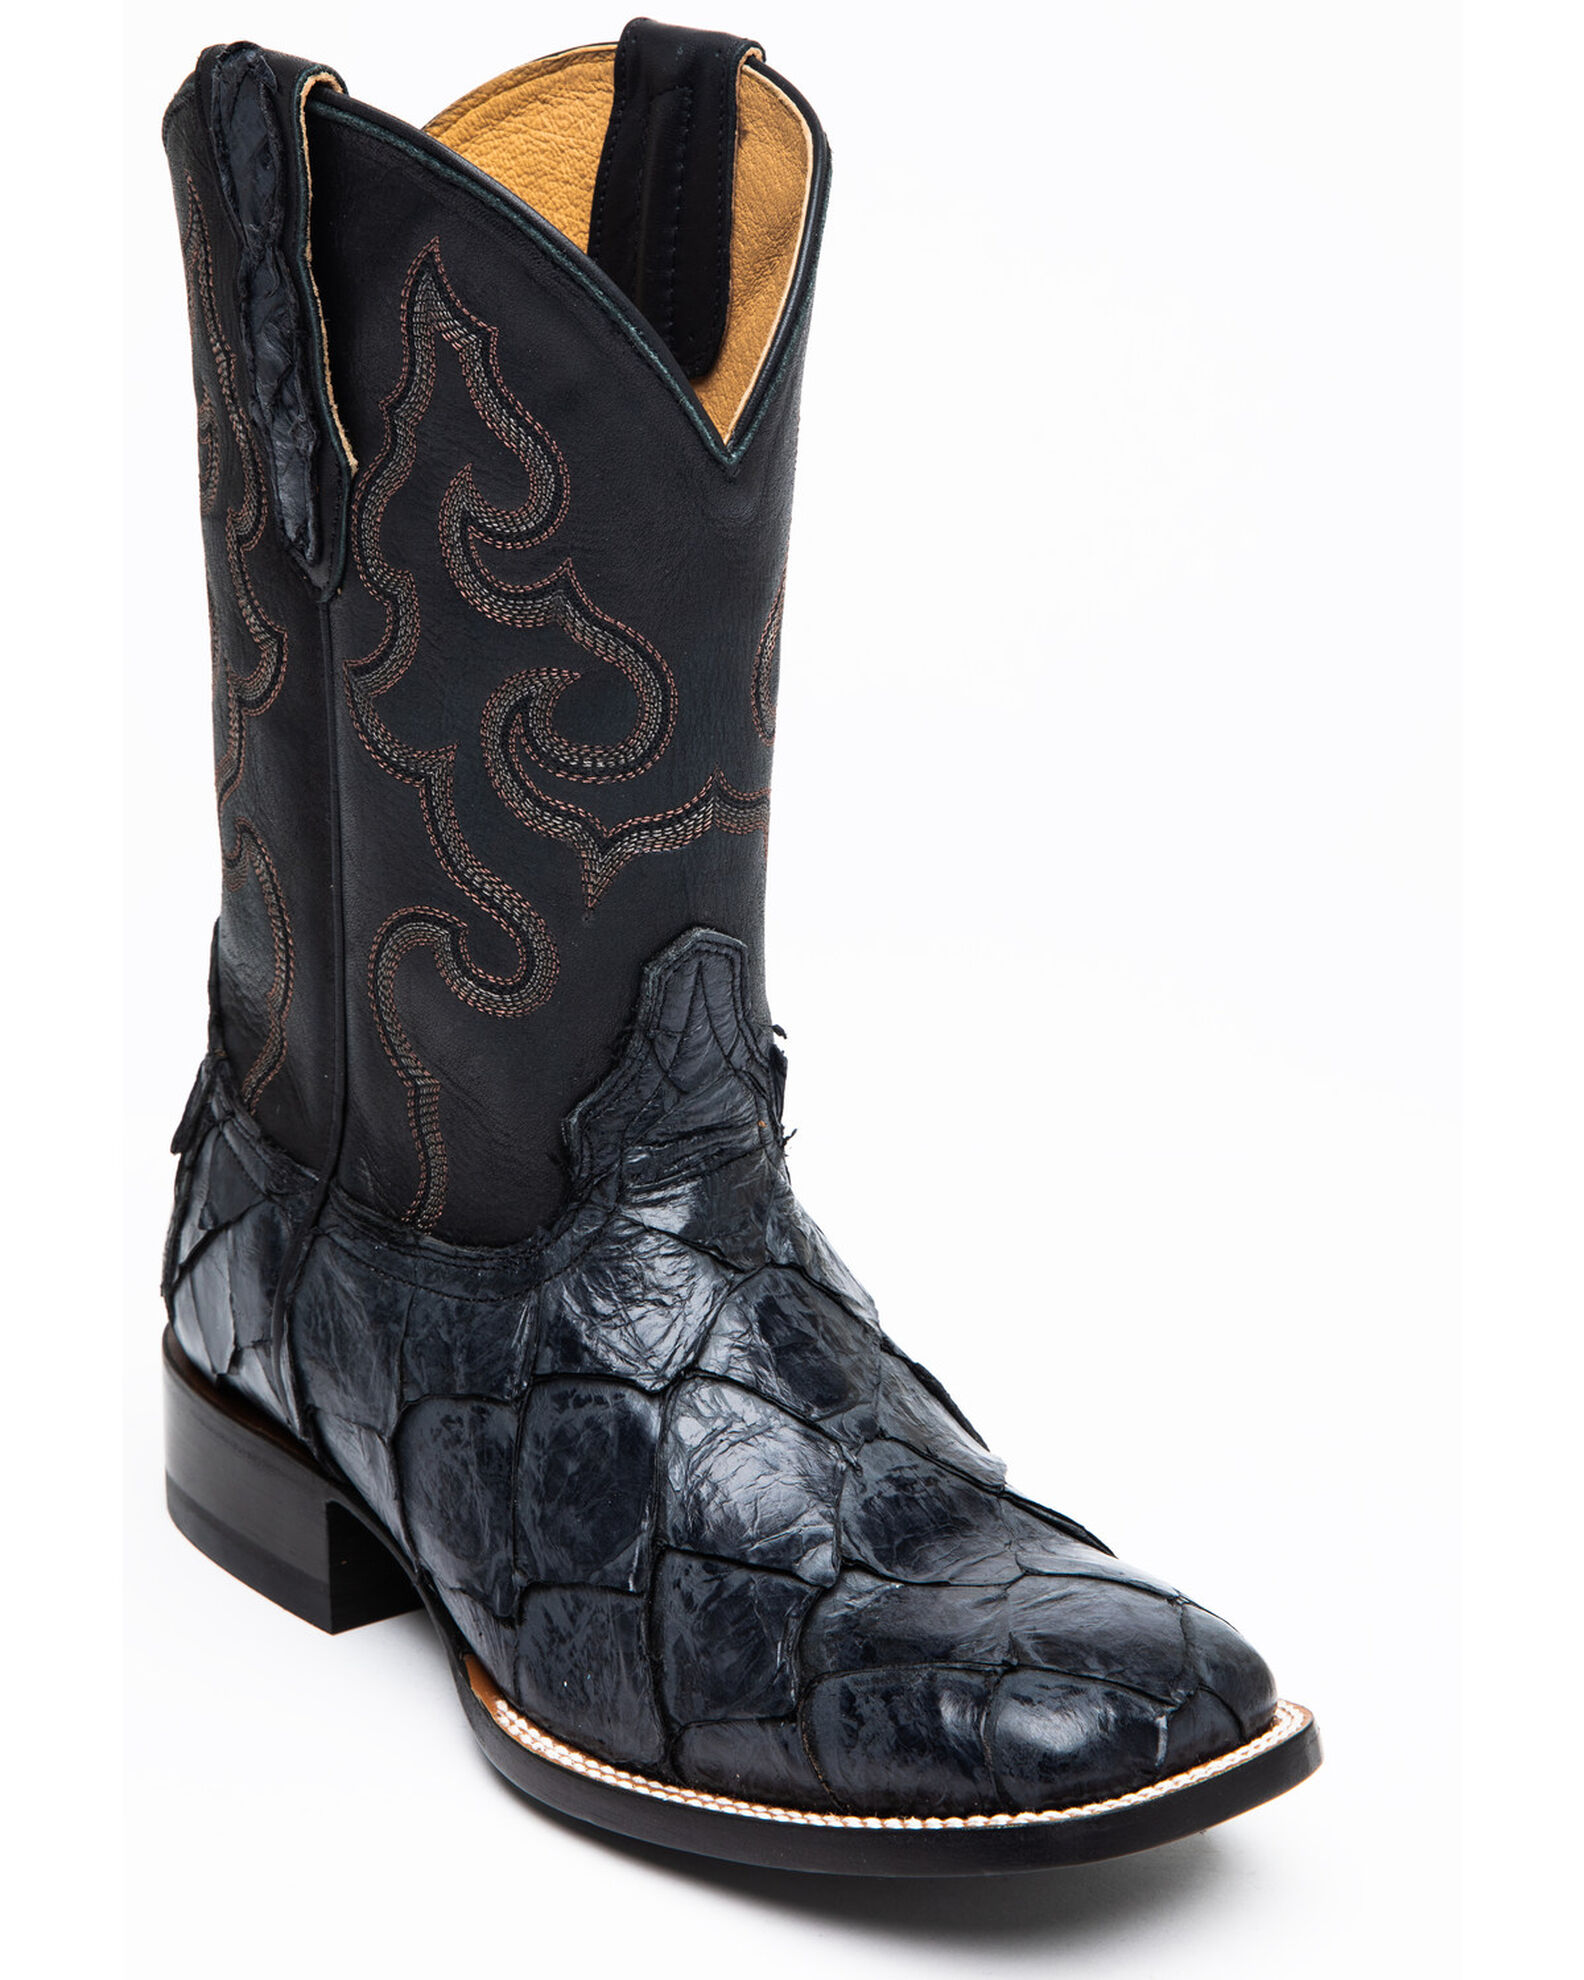 Cody James Men's Black Flat Pirarucu Western Boots - Narrow Square Toe